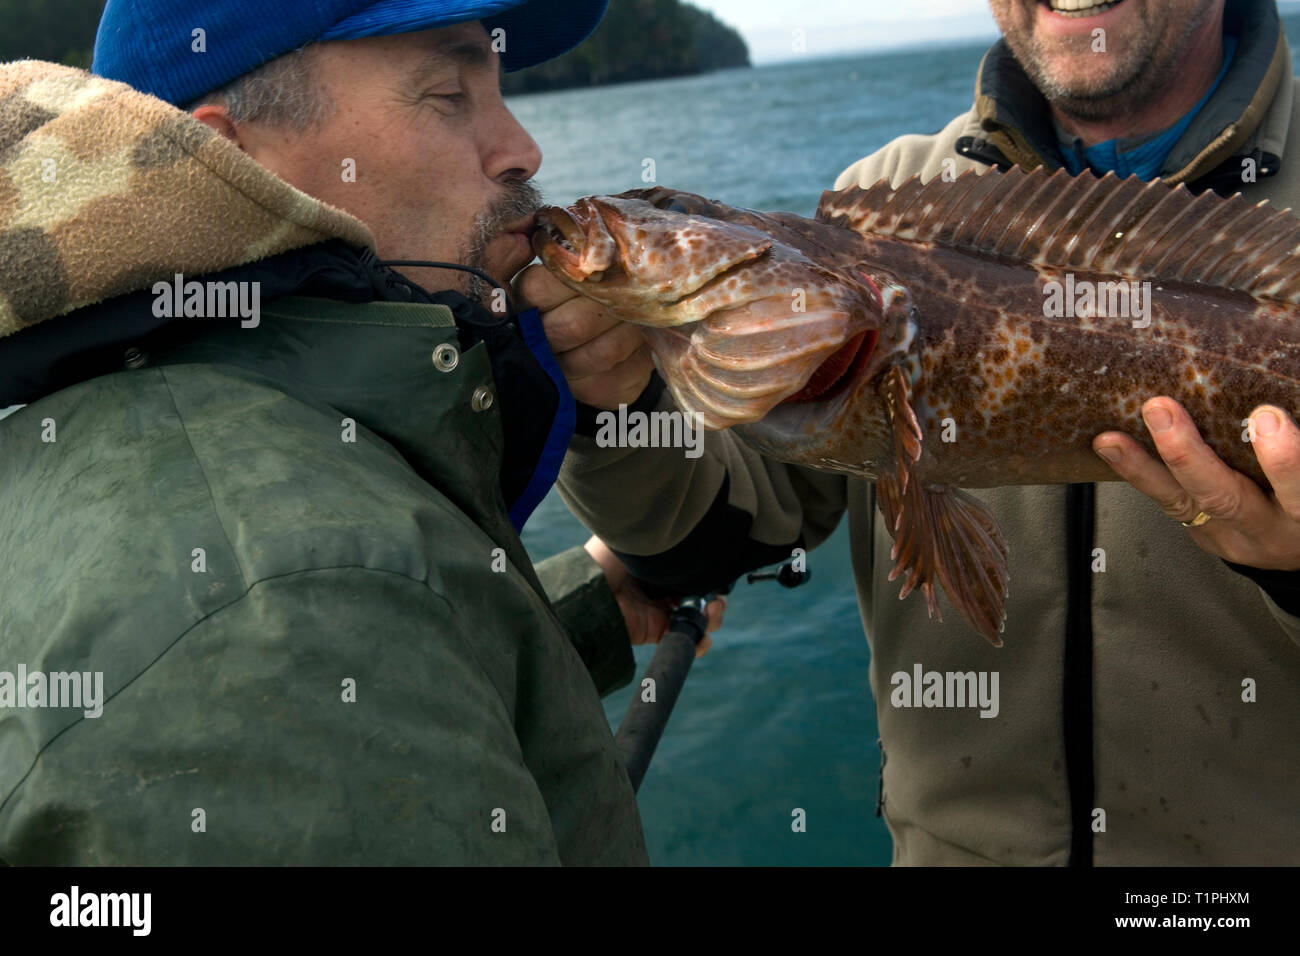 WA05410-00...WASHINGTON - Fisherman caught a large ling cod off San Juan Island. (MR) Stock Photo